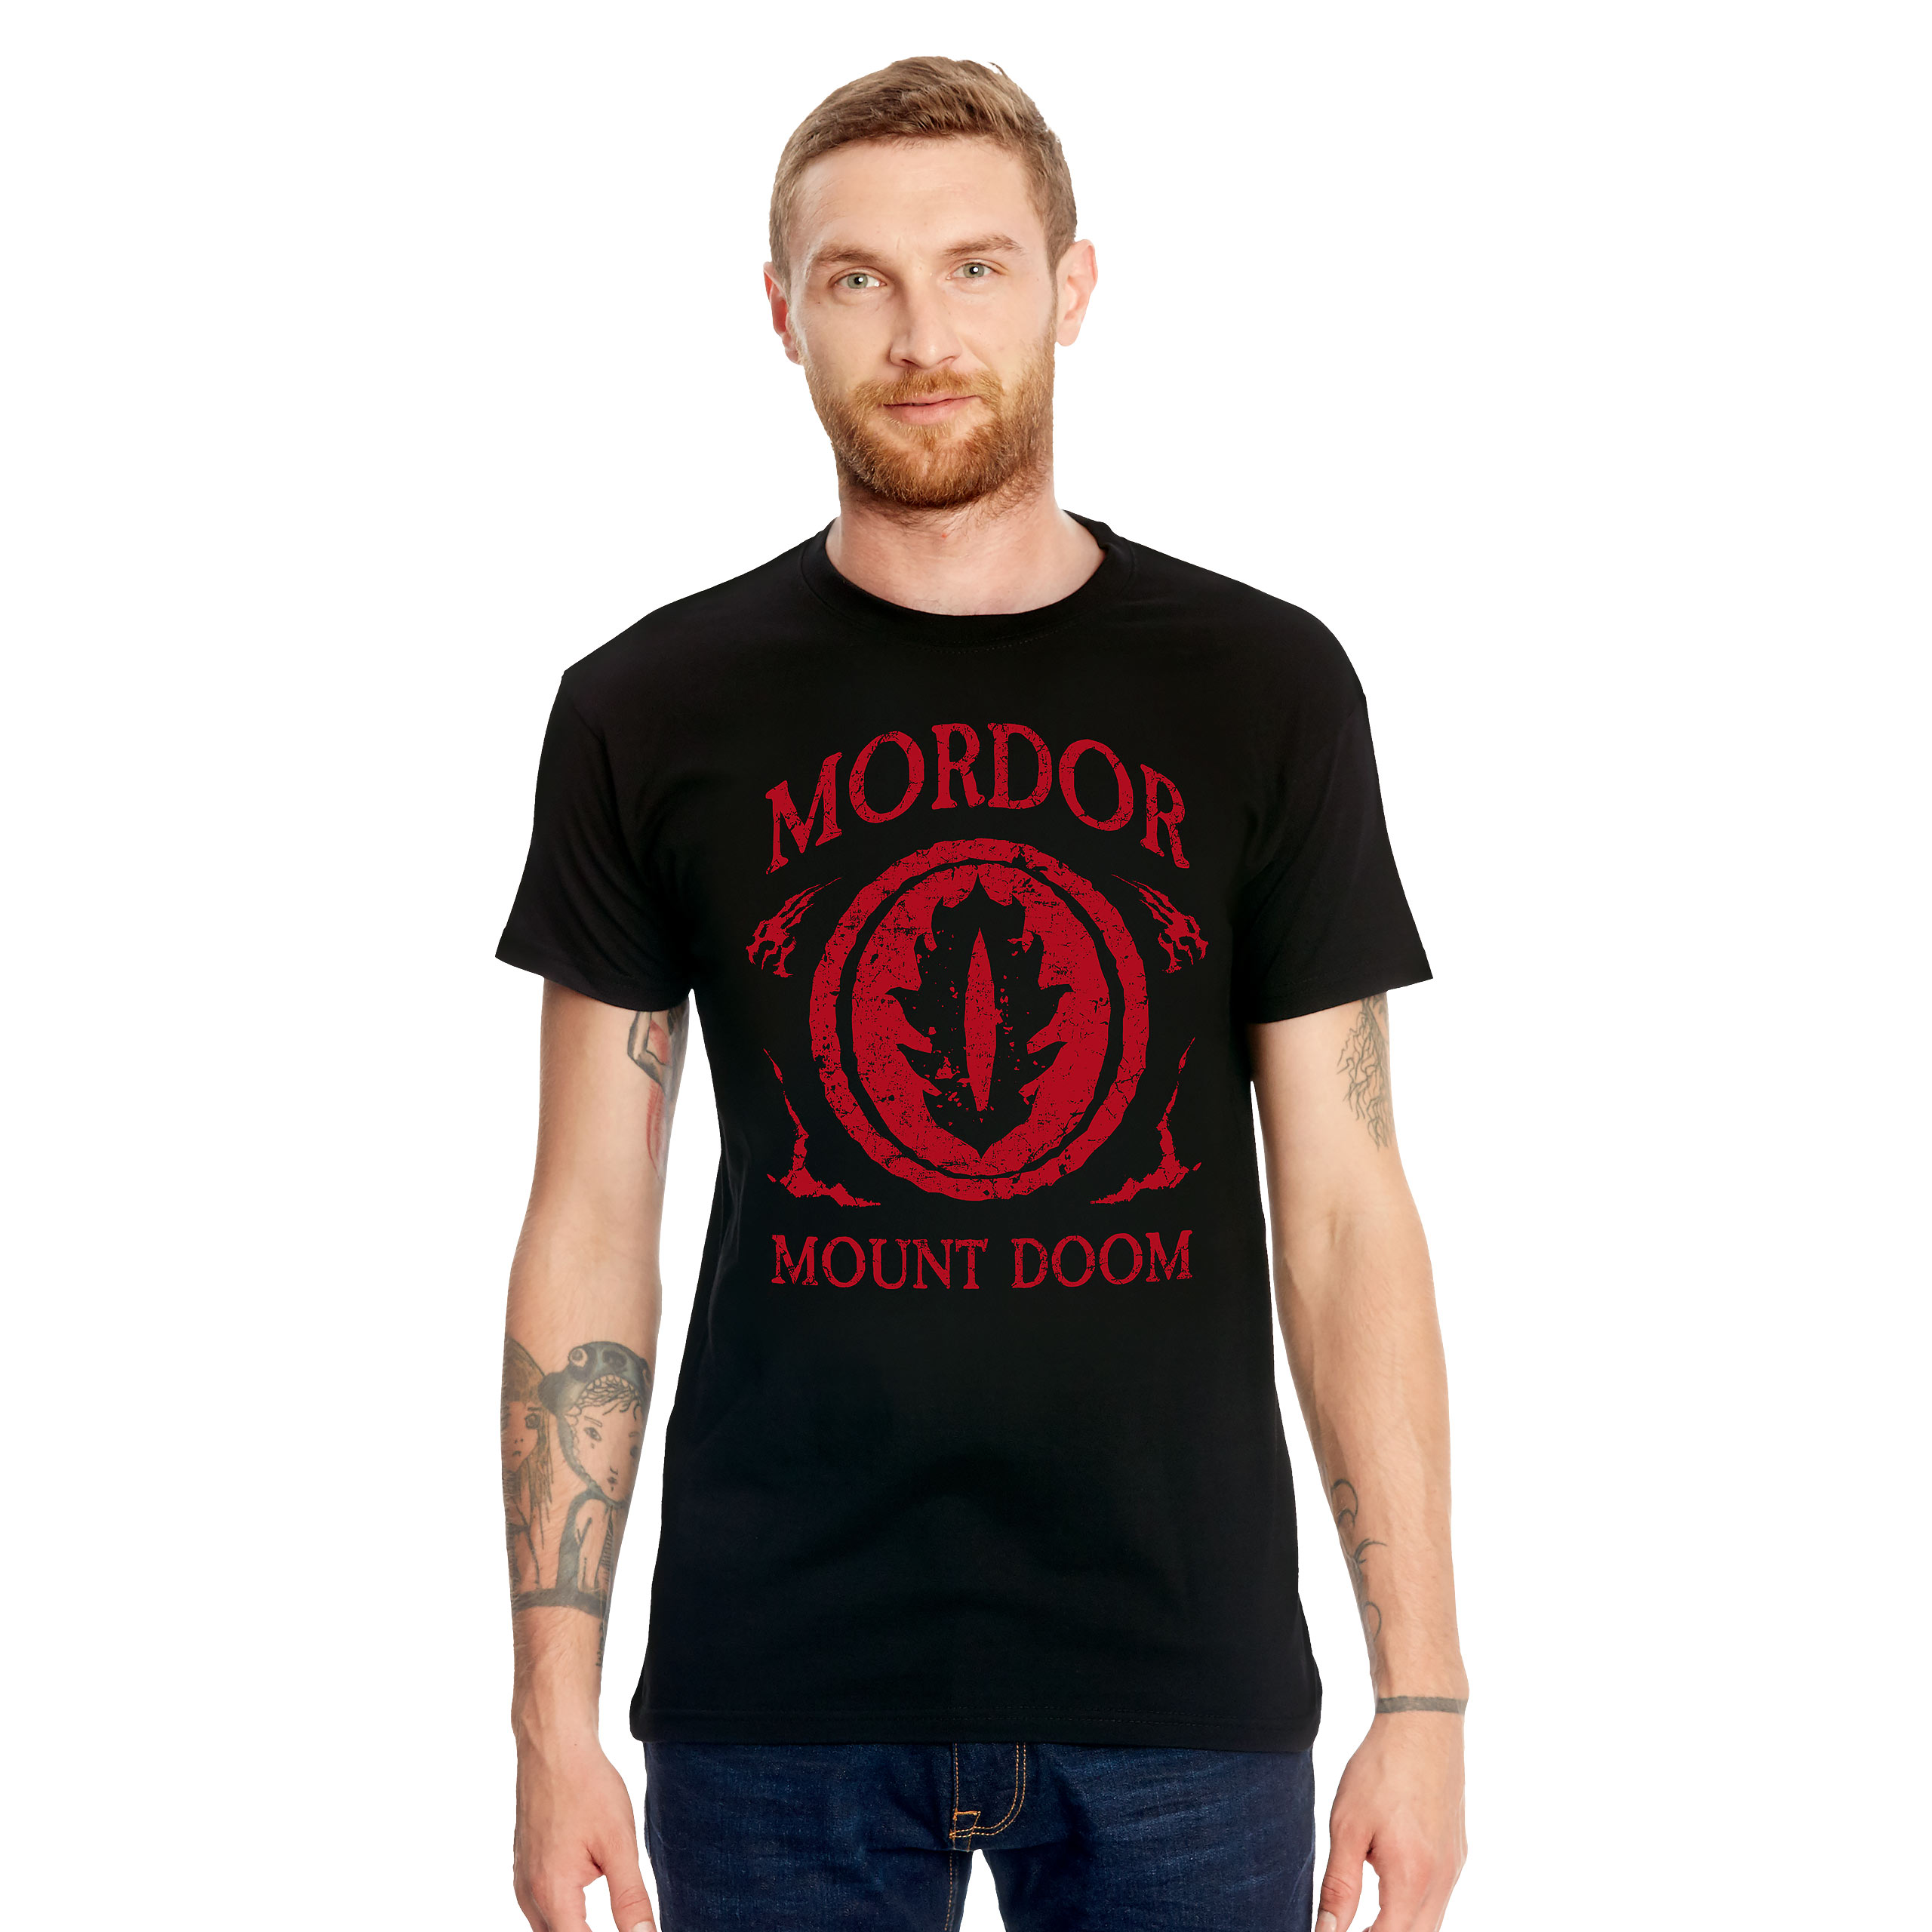 Herr der Ringe - Mordor T-Shirt